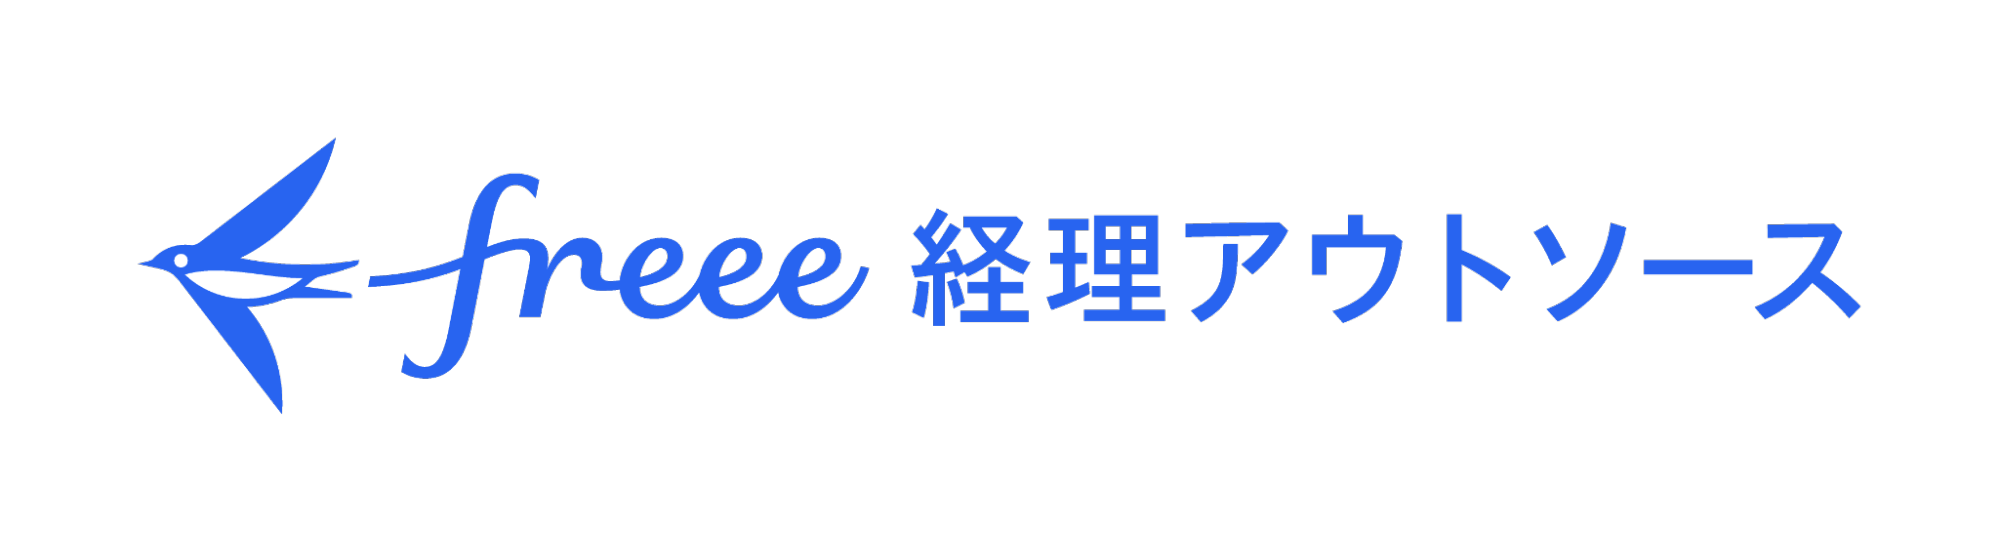 freee経理アウトソース